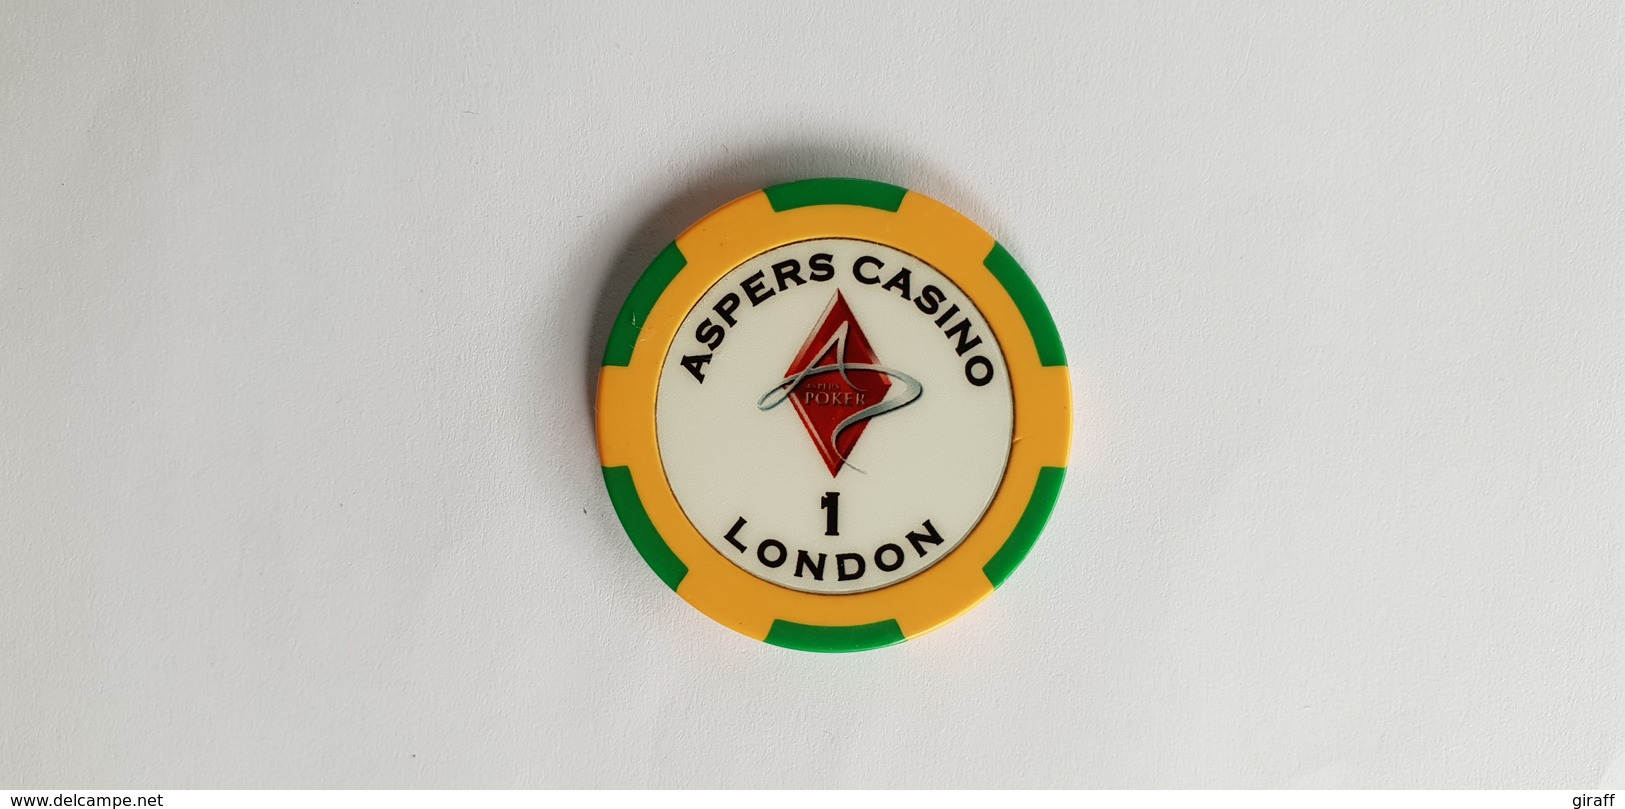 Aspers Casino Poker London UK 1 GBP Casino Chip Jeton - Casino